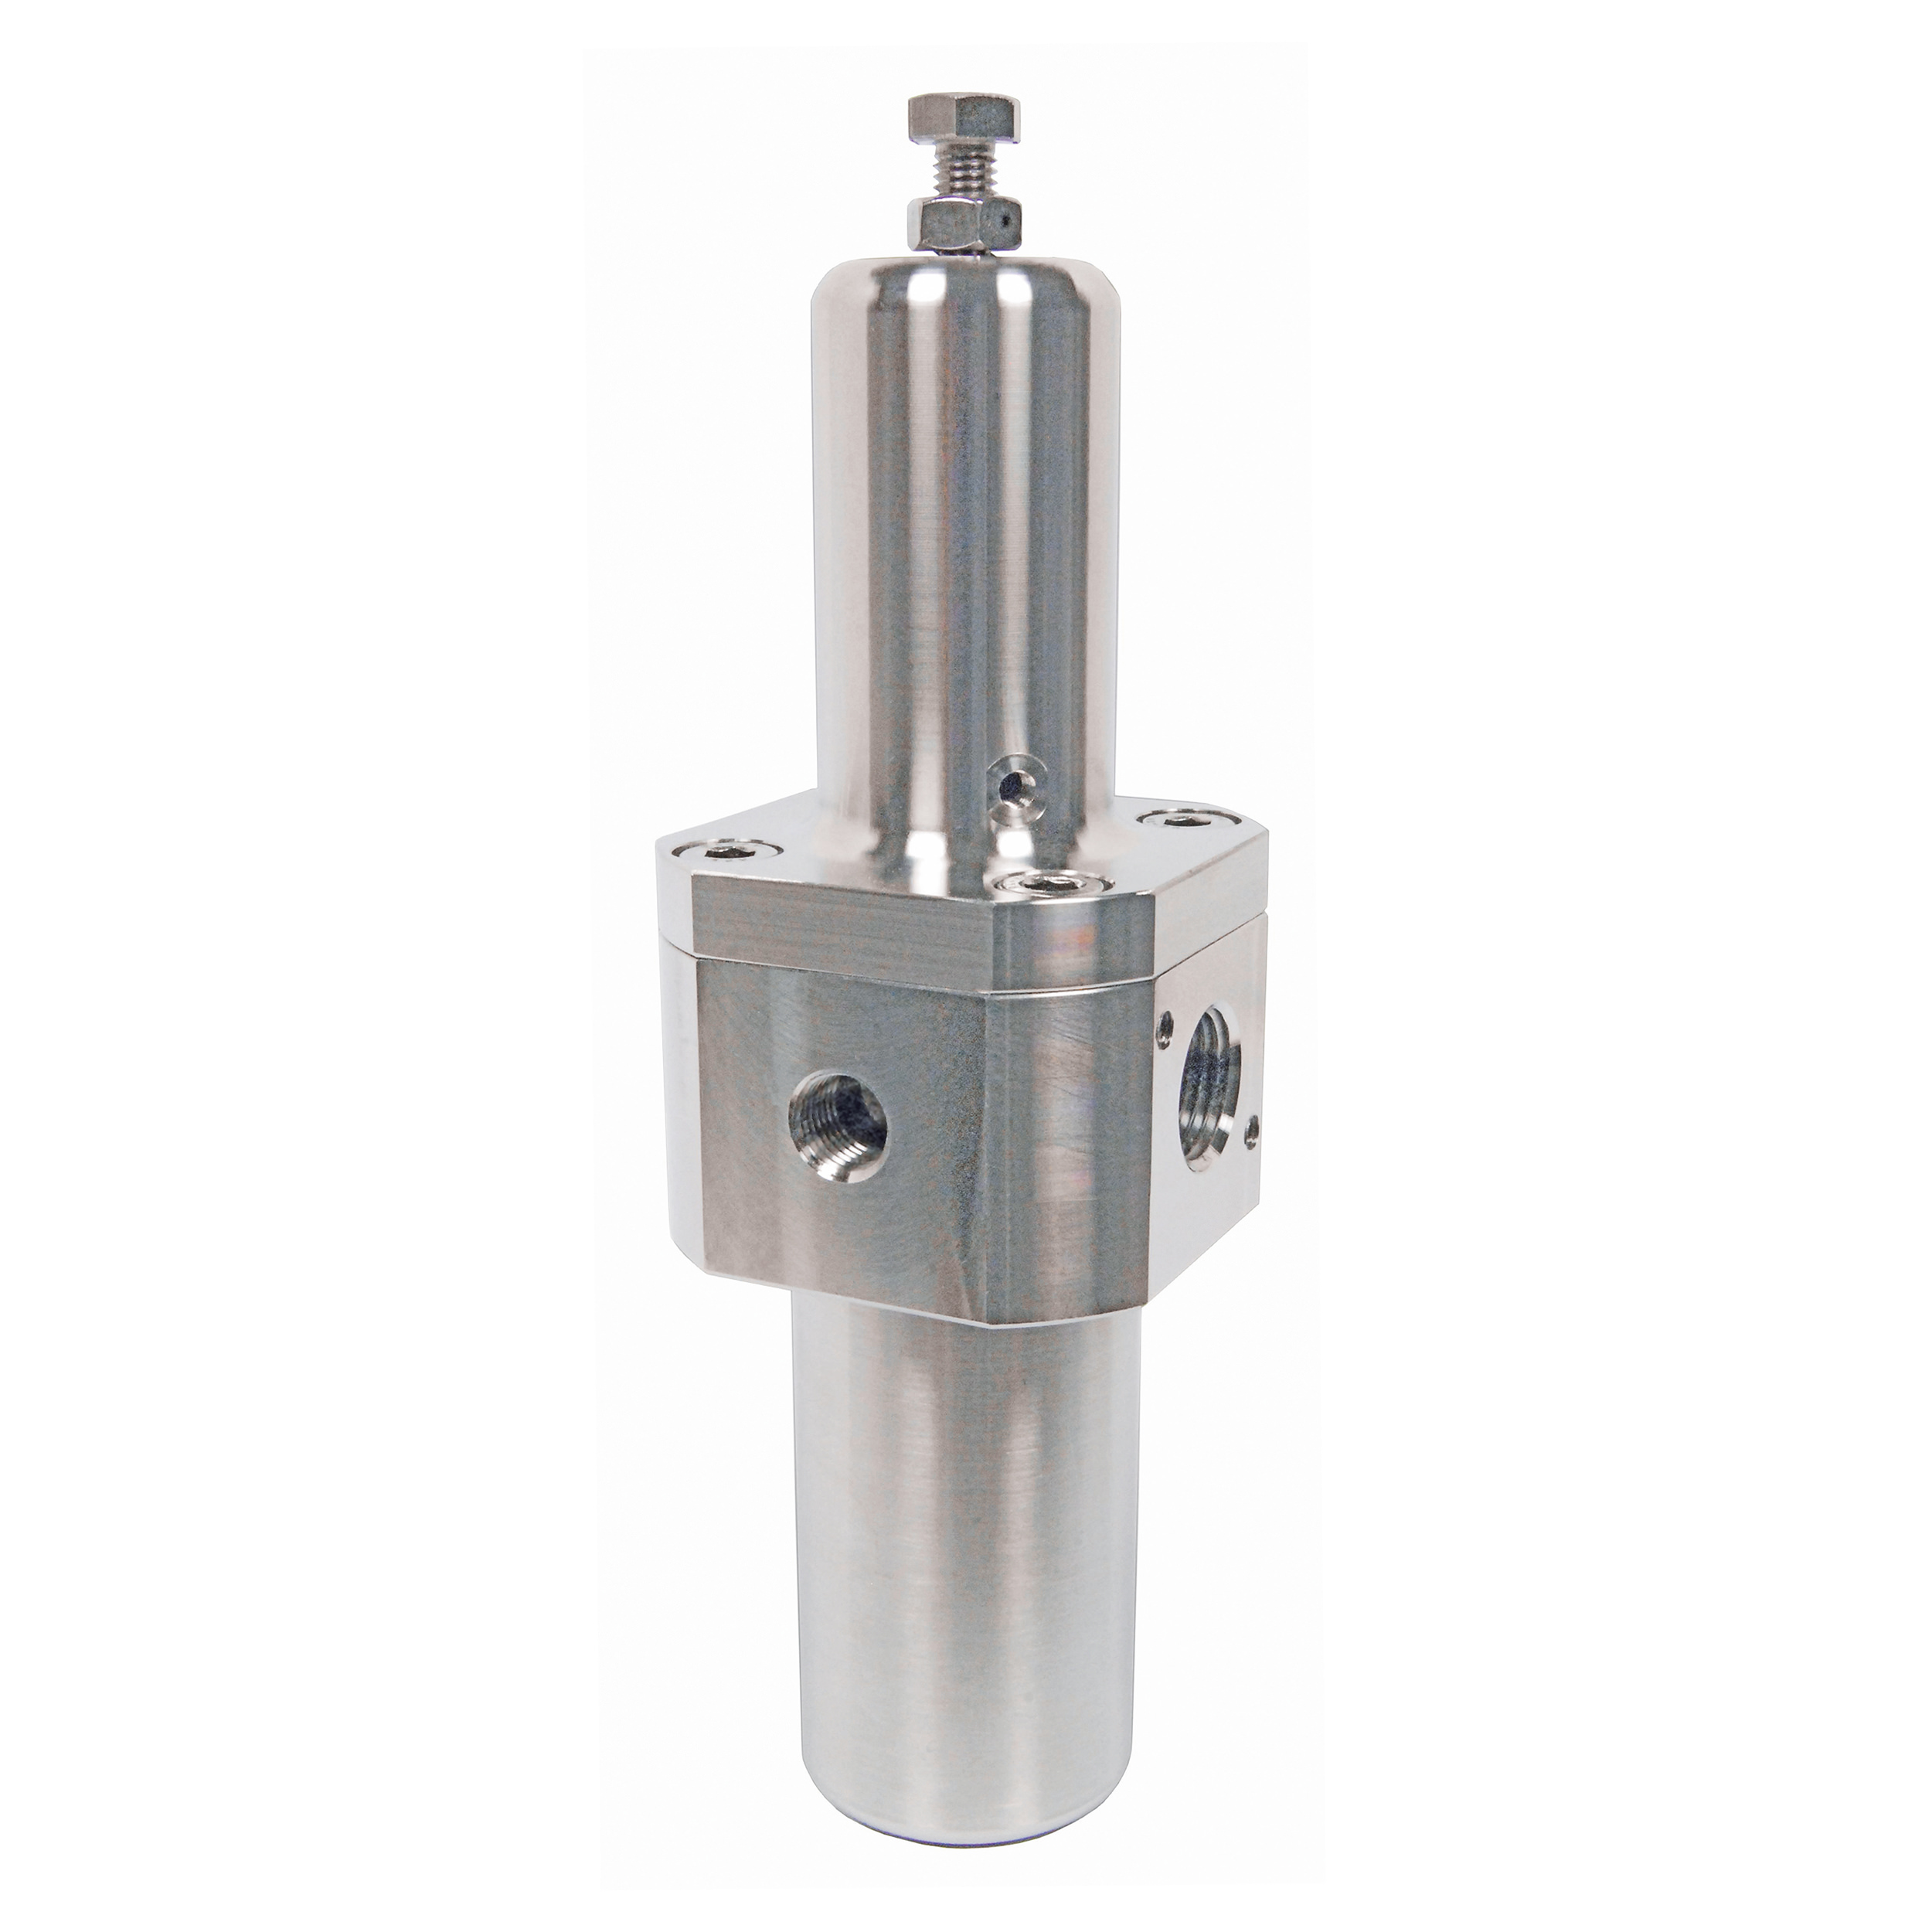 Filterdruckregler Typ 690 Edelstahl, ohne Manometer, BG 20, G¼, 0,2–3 bar,  Handablassventil am Behälter, QN: 3.000 Nl/min